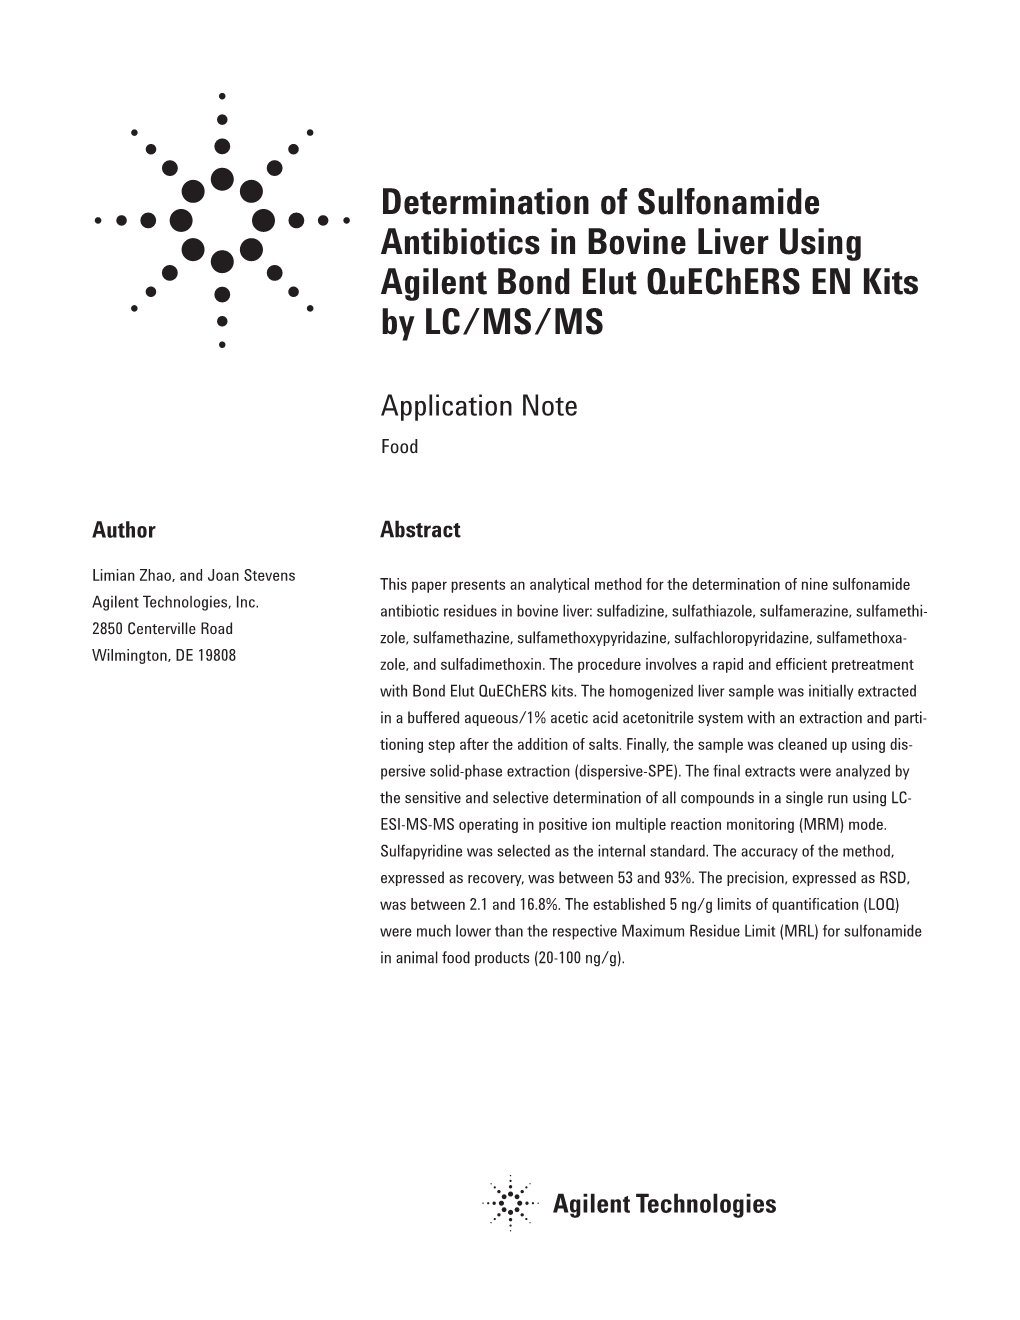 Determination of Sulfonamide Antibiotics in Bovine Liver Using Agilent Bond Elut Quechers EN Kits by LC/MS/MS